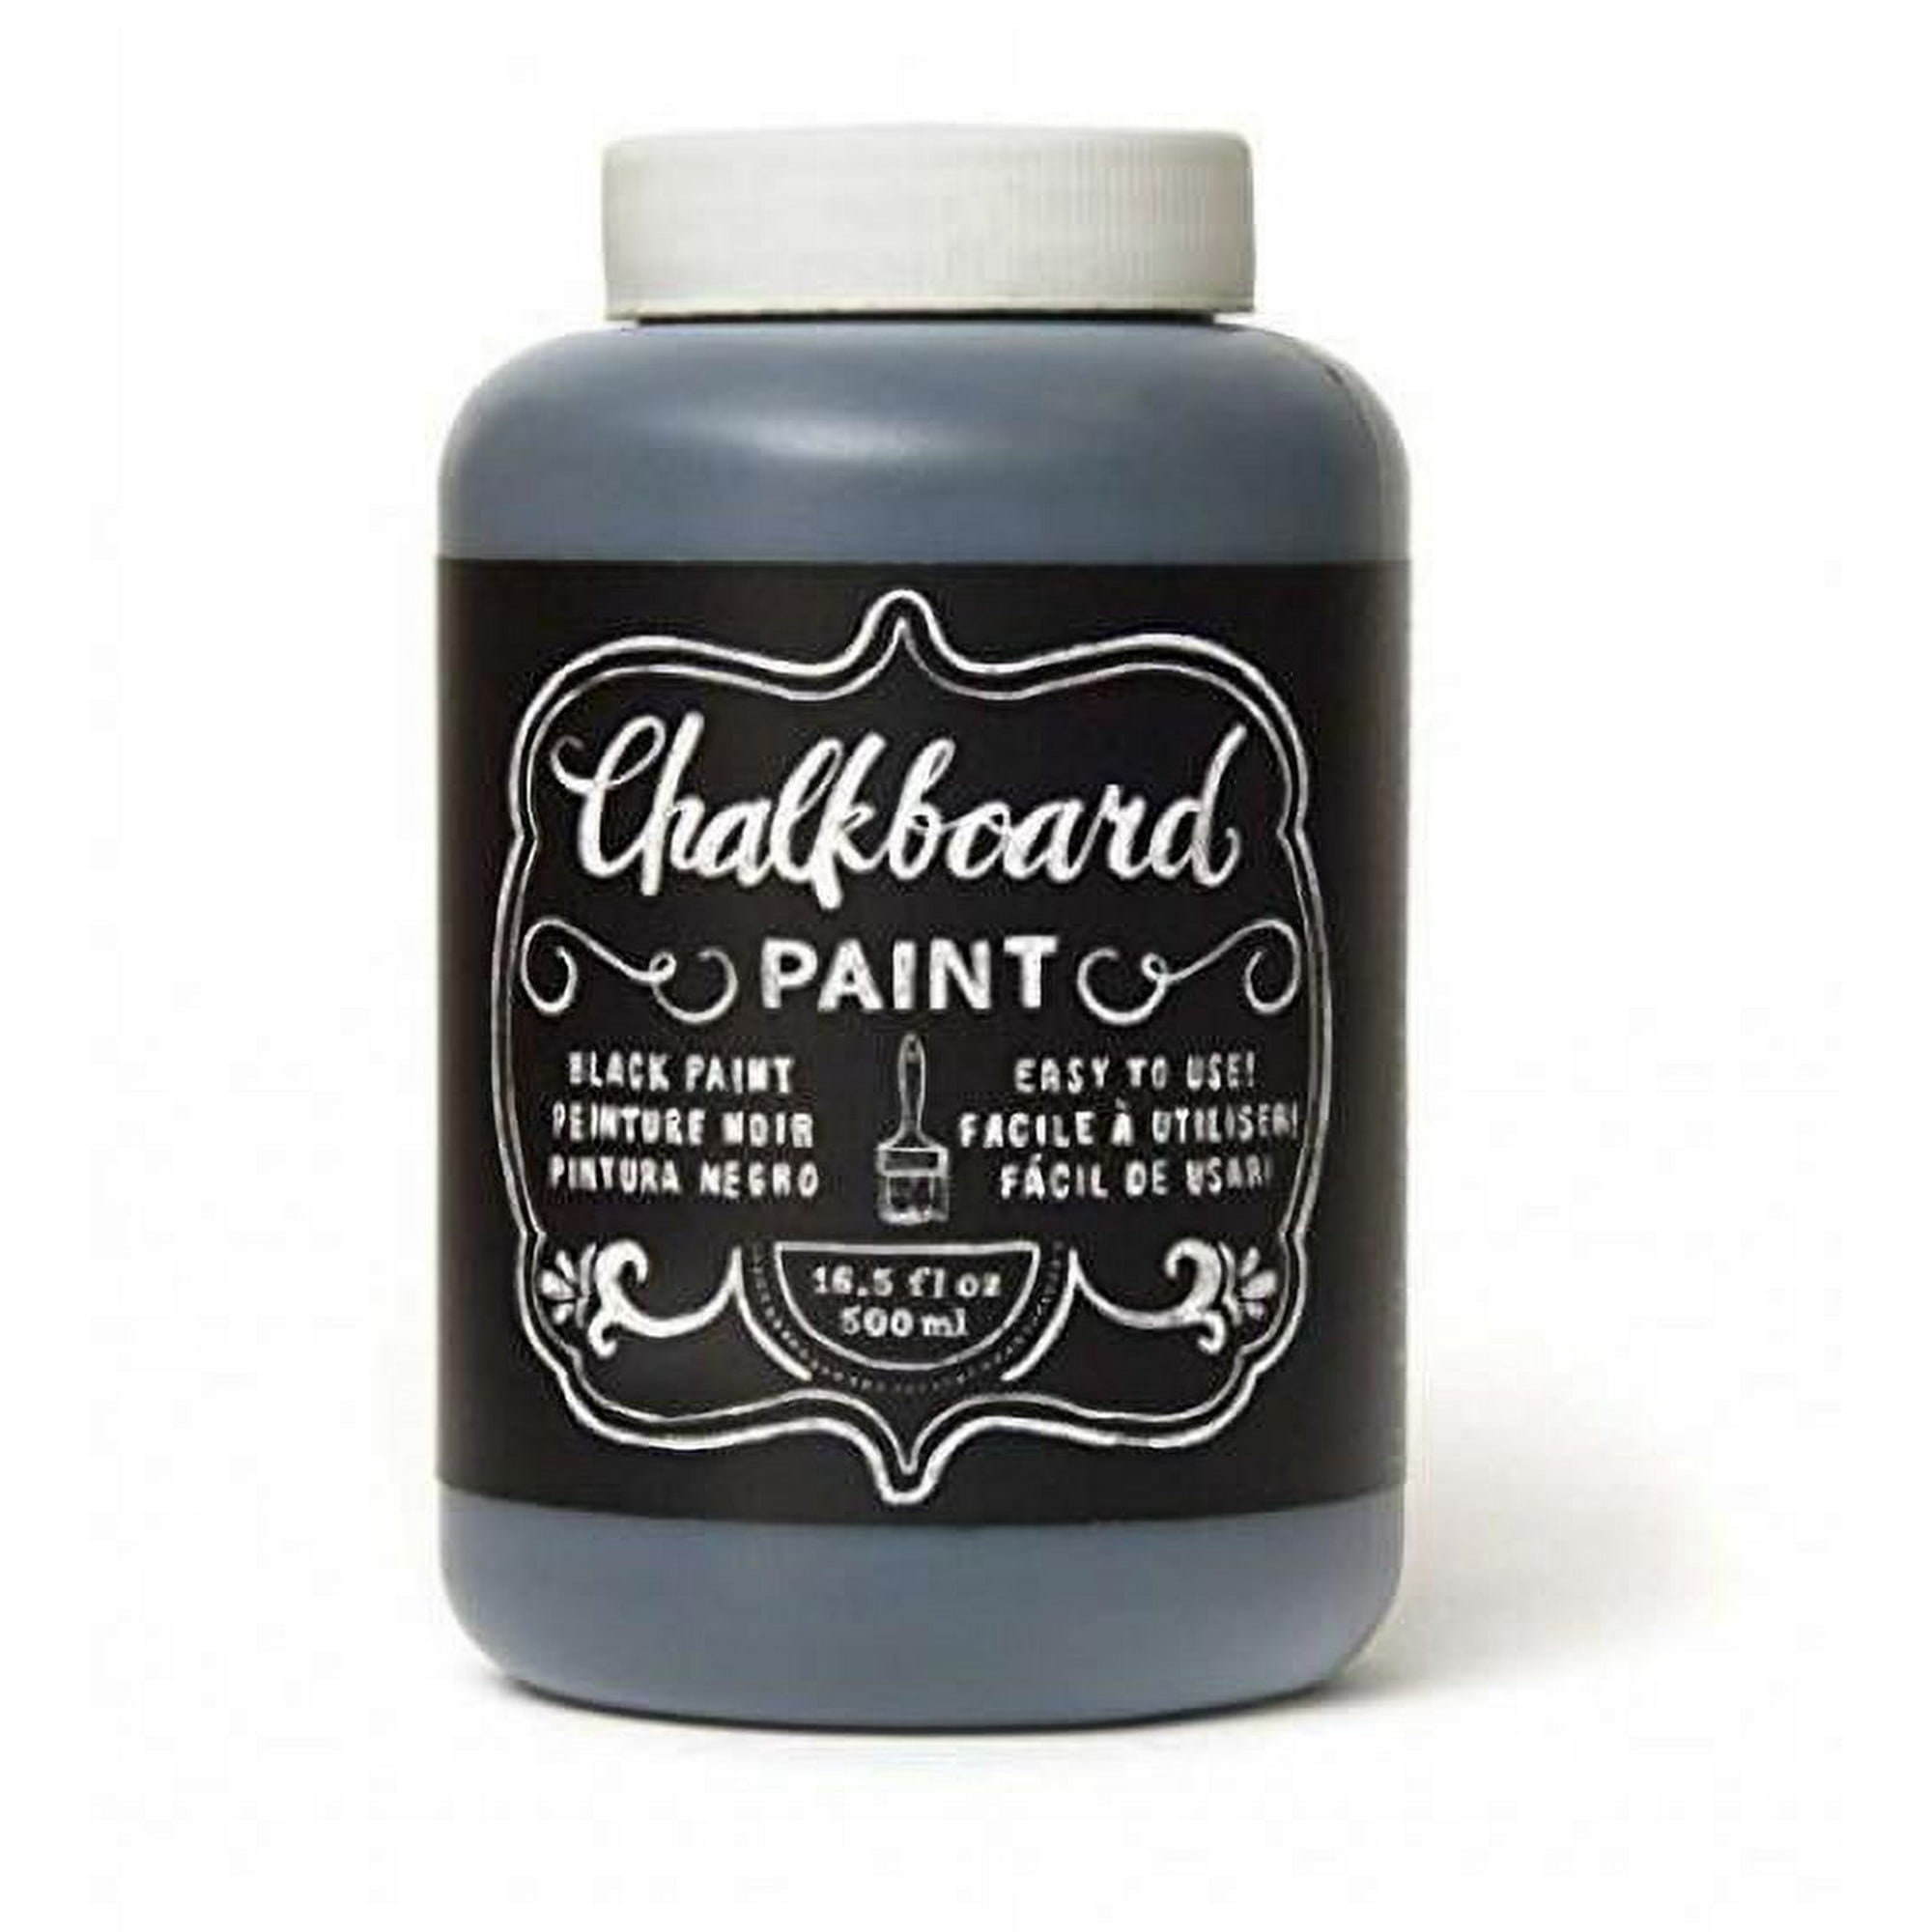 Pentart Chalkboard Paint Black 100 ML for Canvas Art, Mixed Media